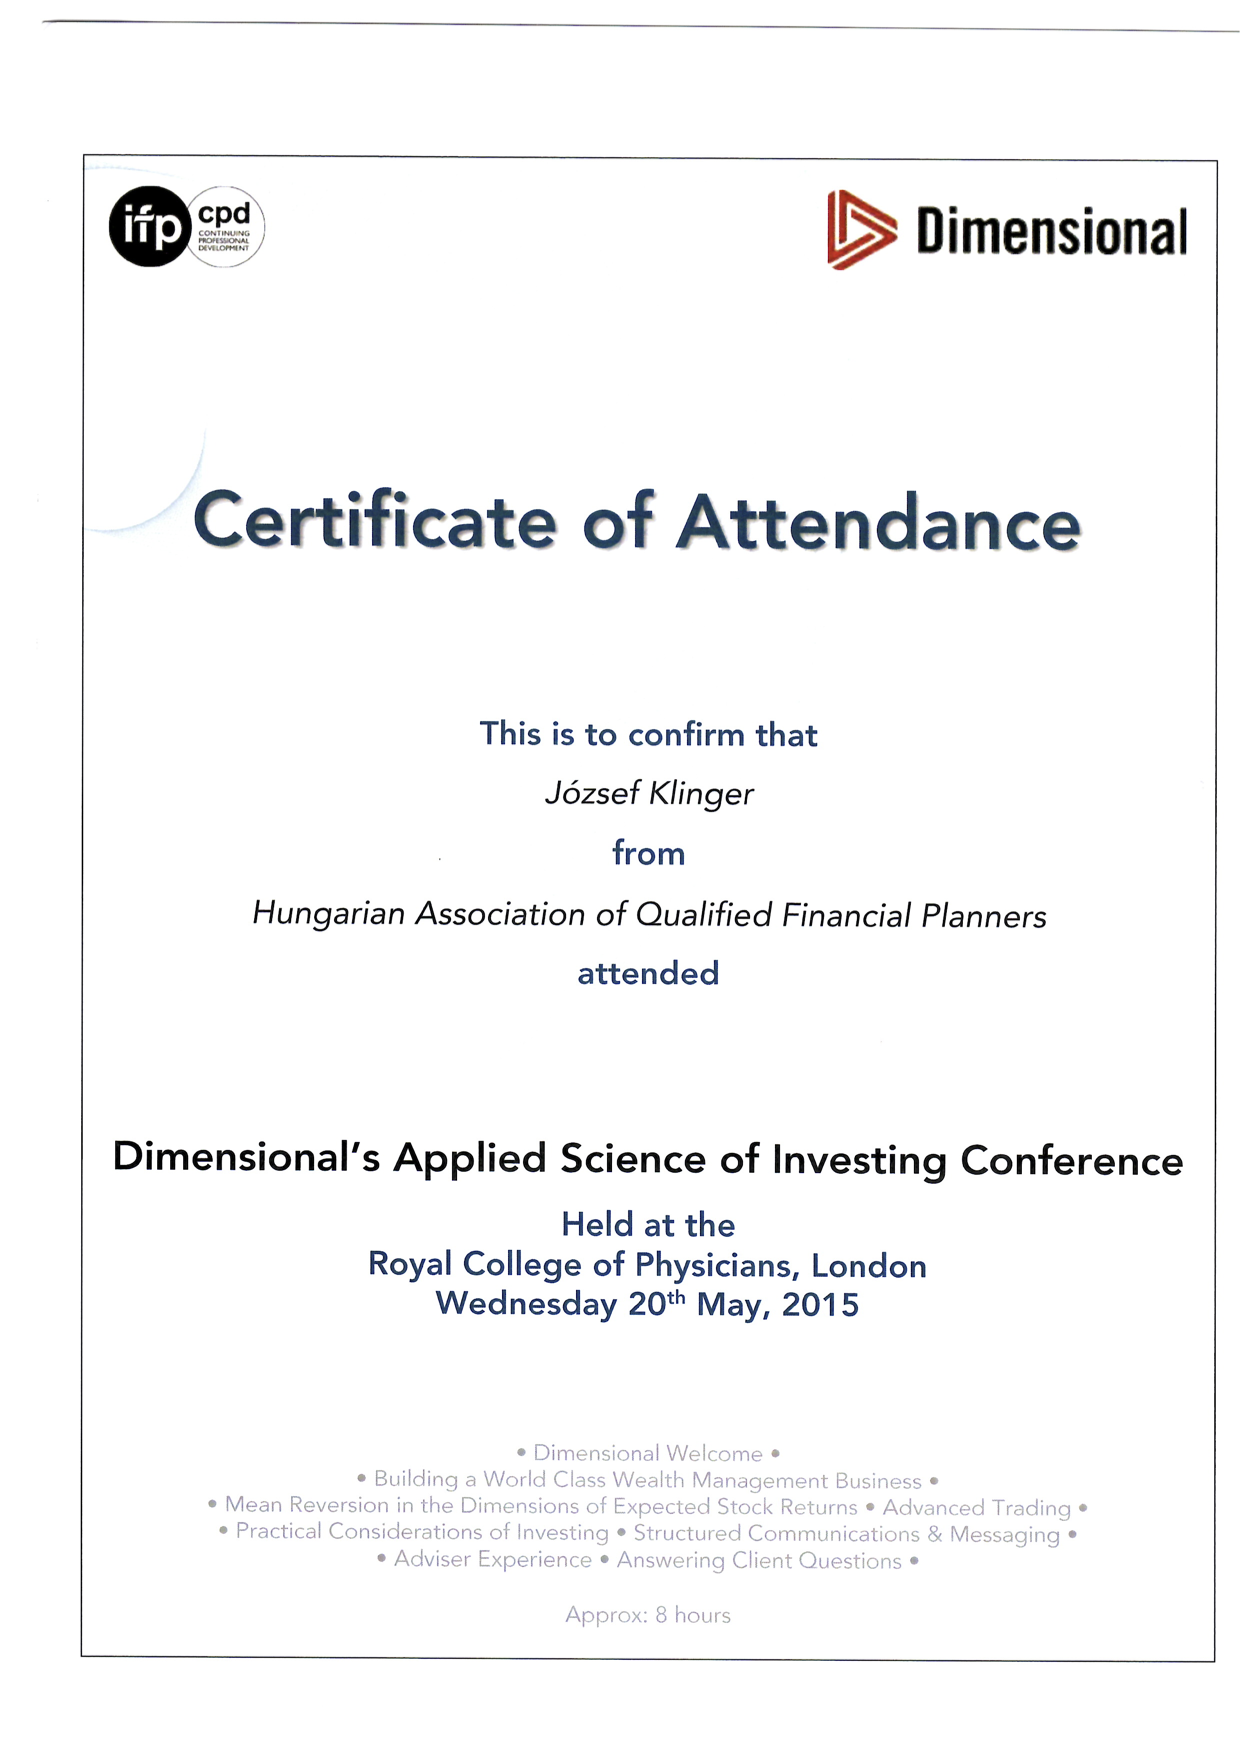 JK_Dimensional_Certificate_of_Attendance_2.png